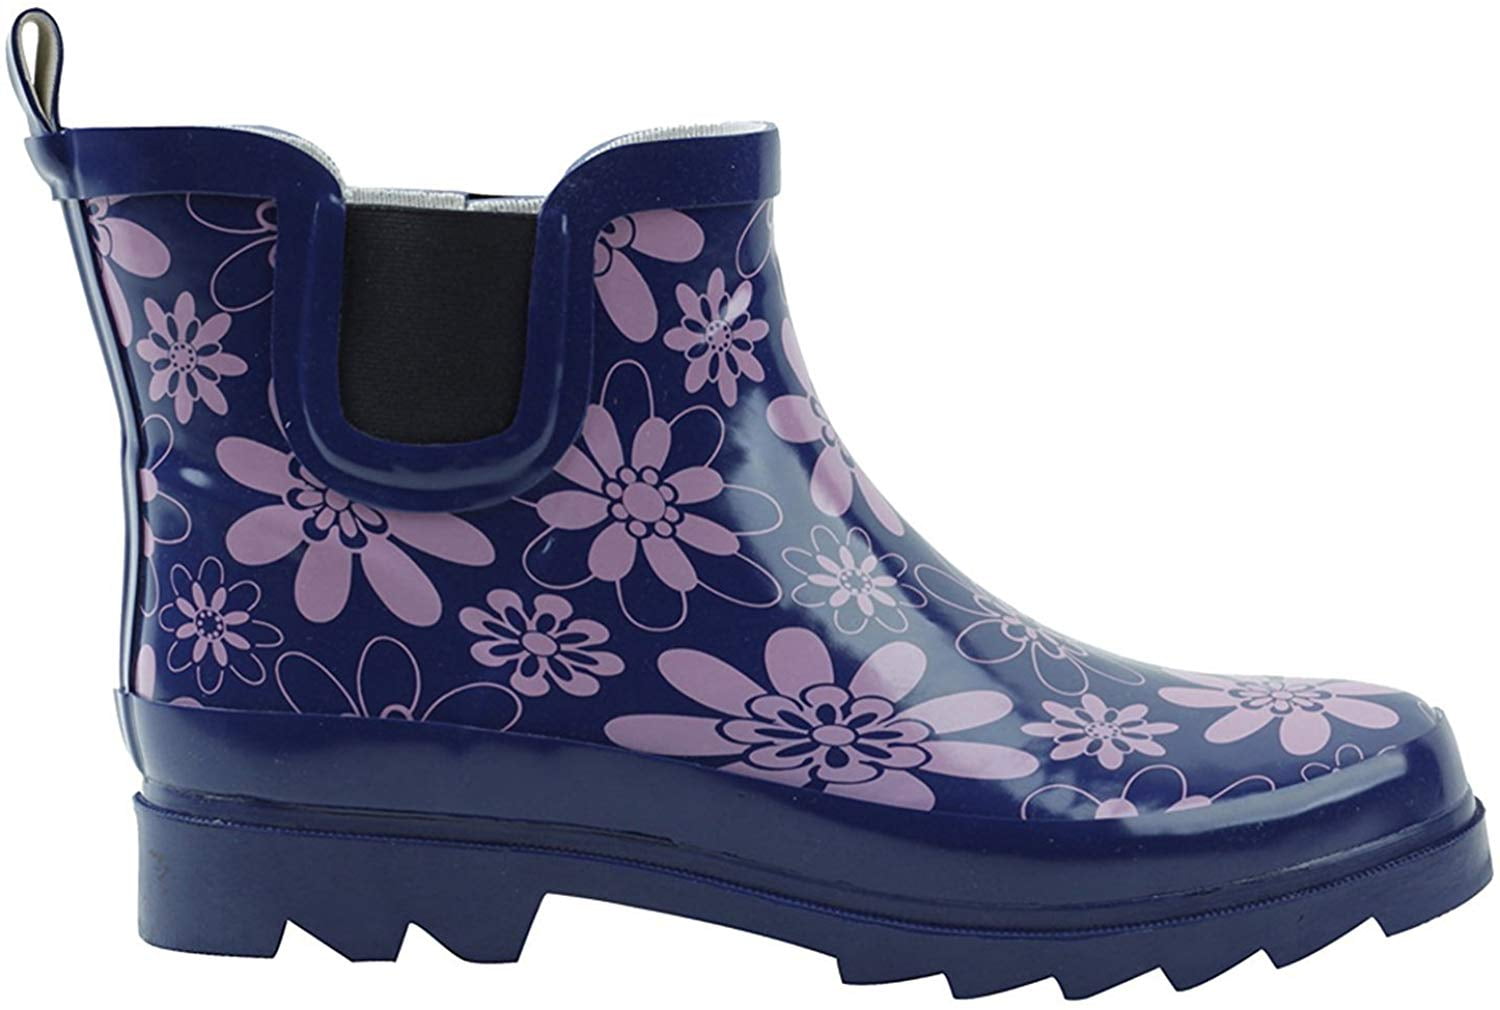 S&B - Women's Short Ankle Rain Boots Garden Rubber ...